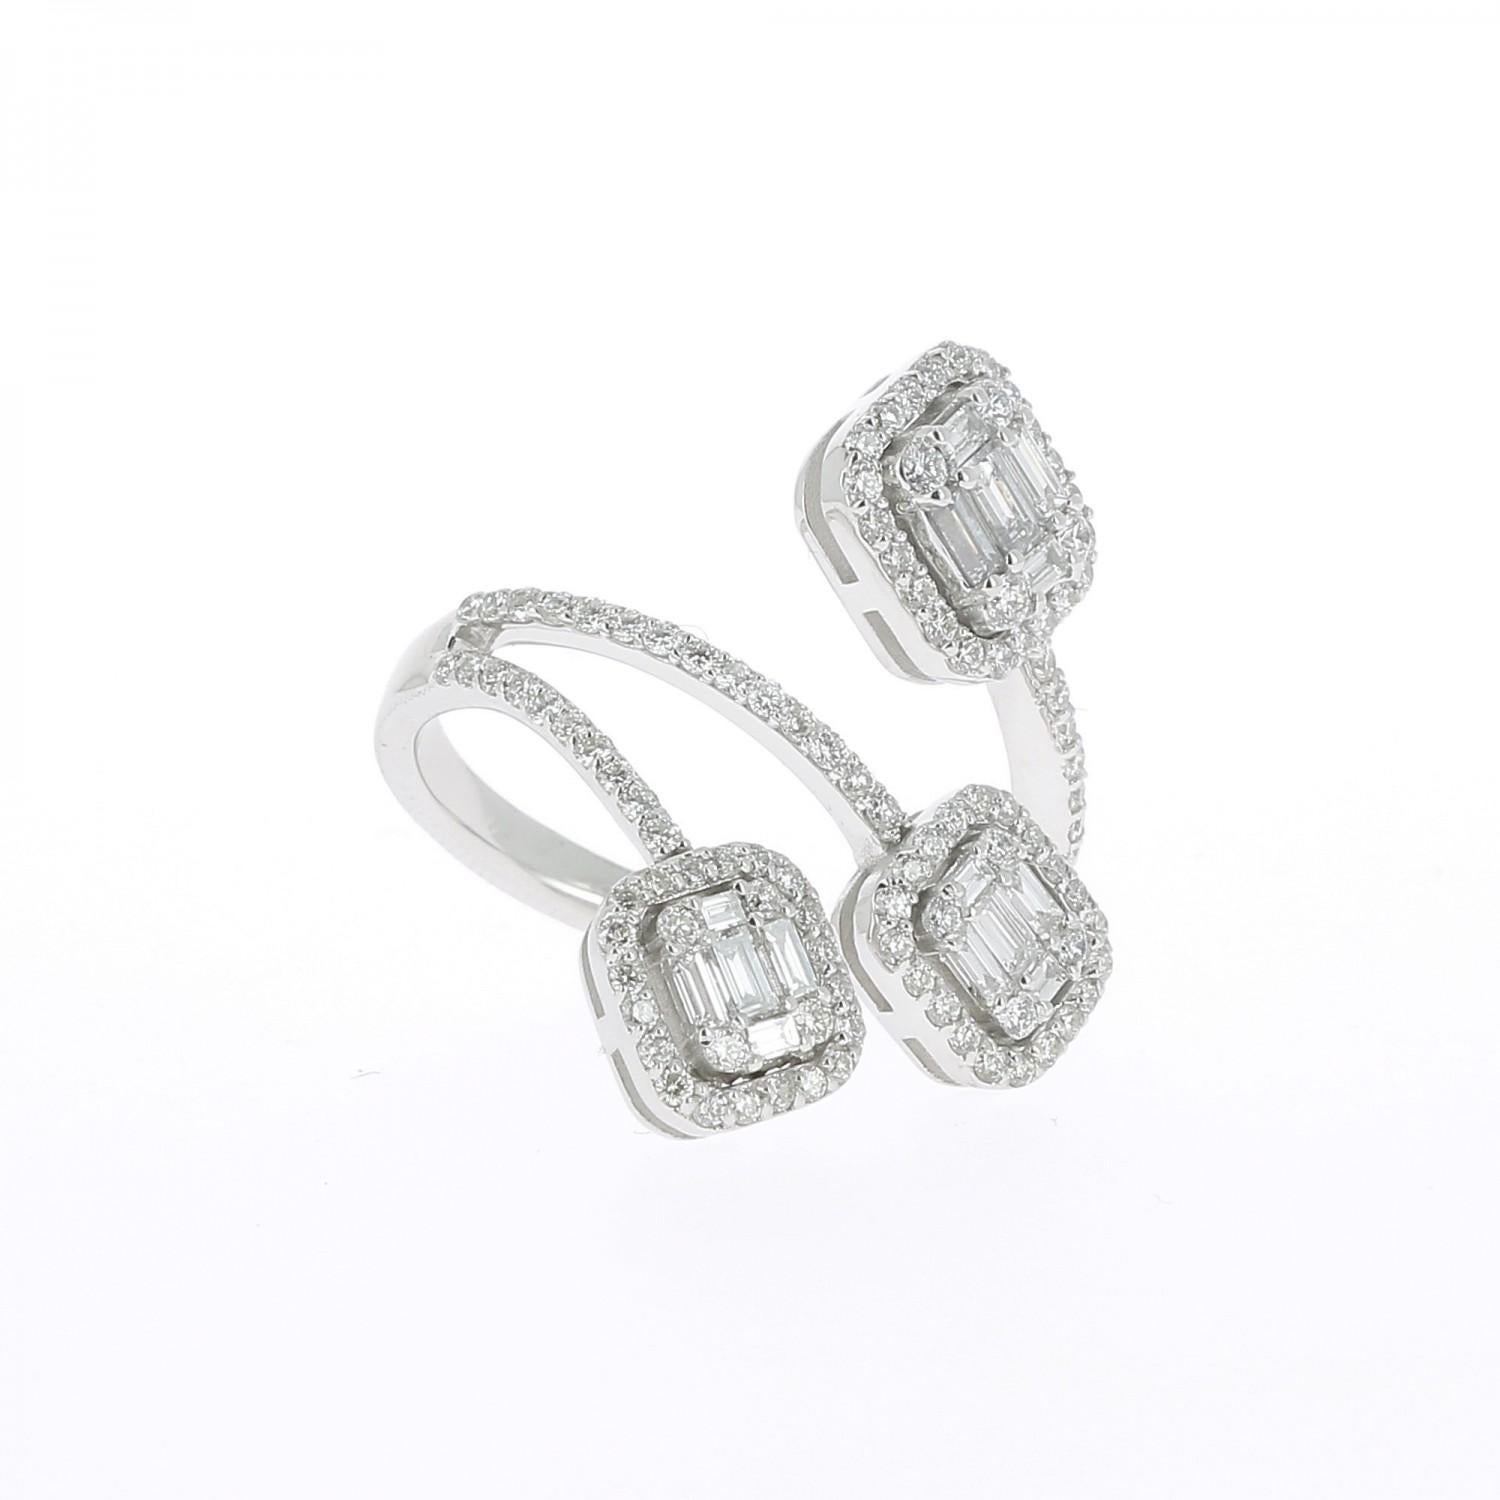 Contemporary 1.08 carats GVS Round/Baguette Diamond Ring Trilogy Illusion Emerald-Cut 18KGold